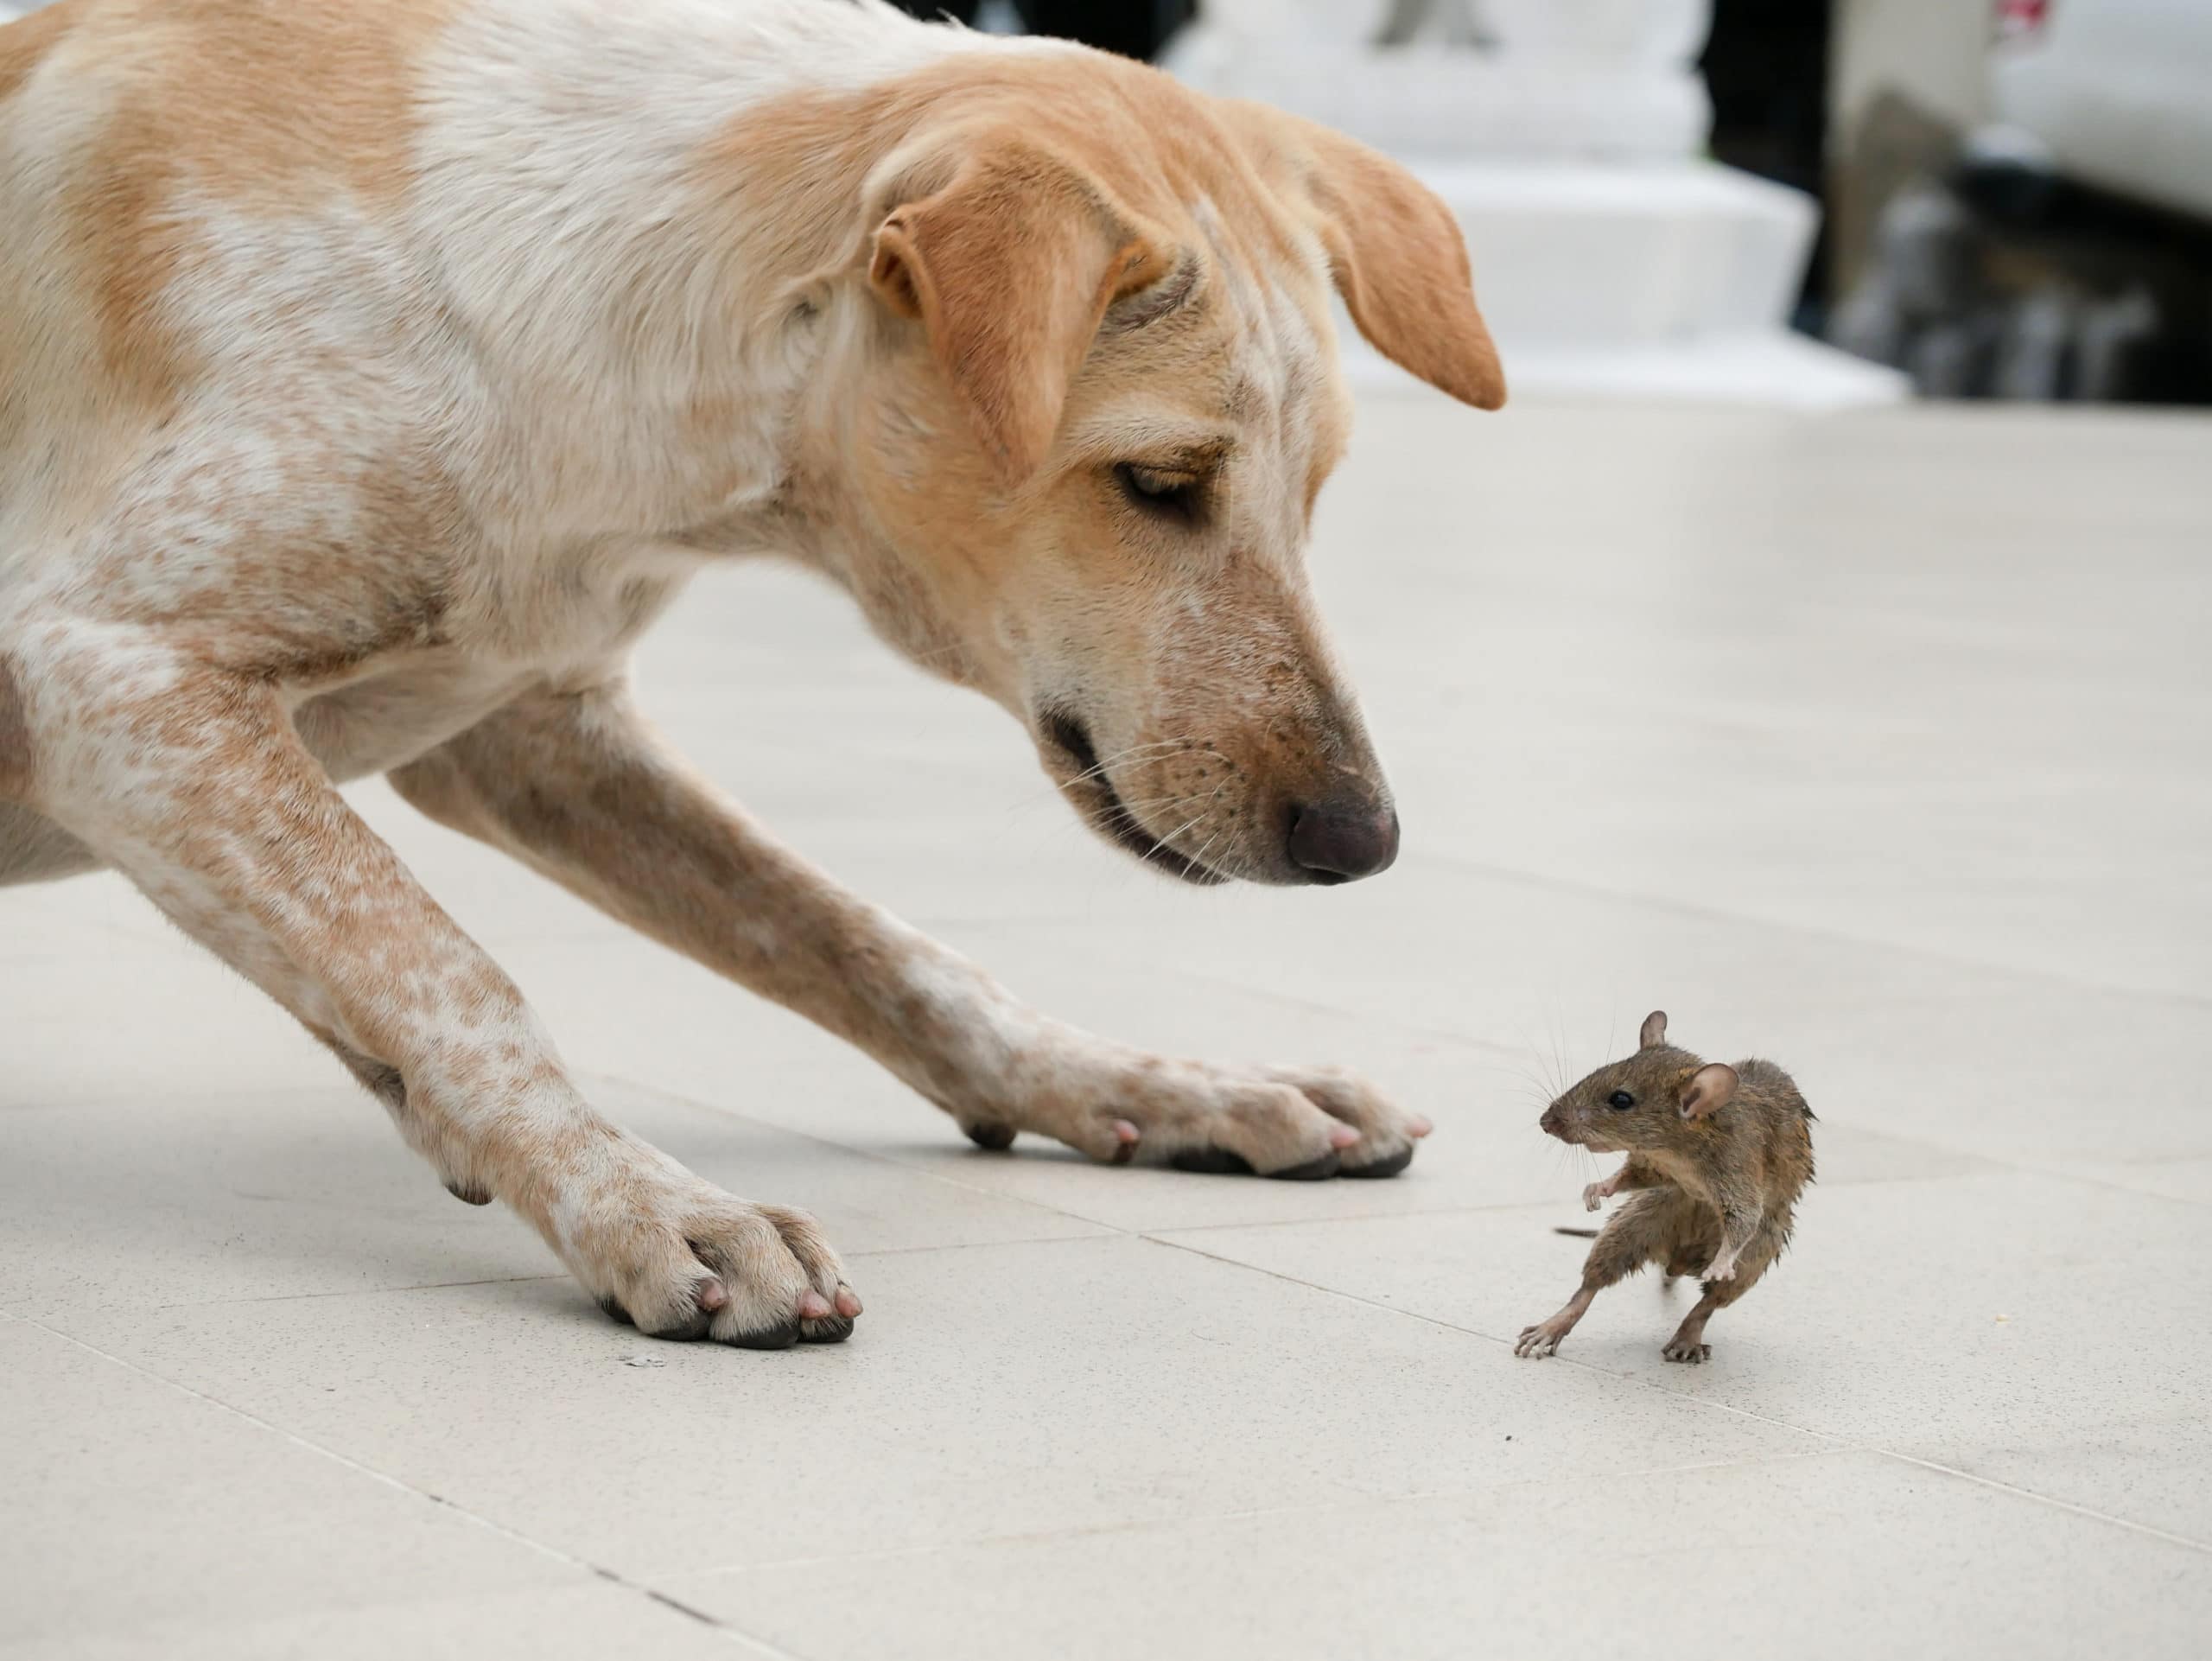 Dog chasing a mice